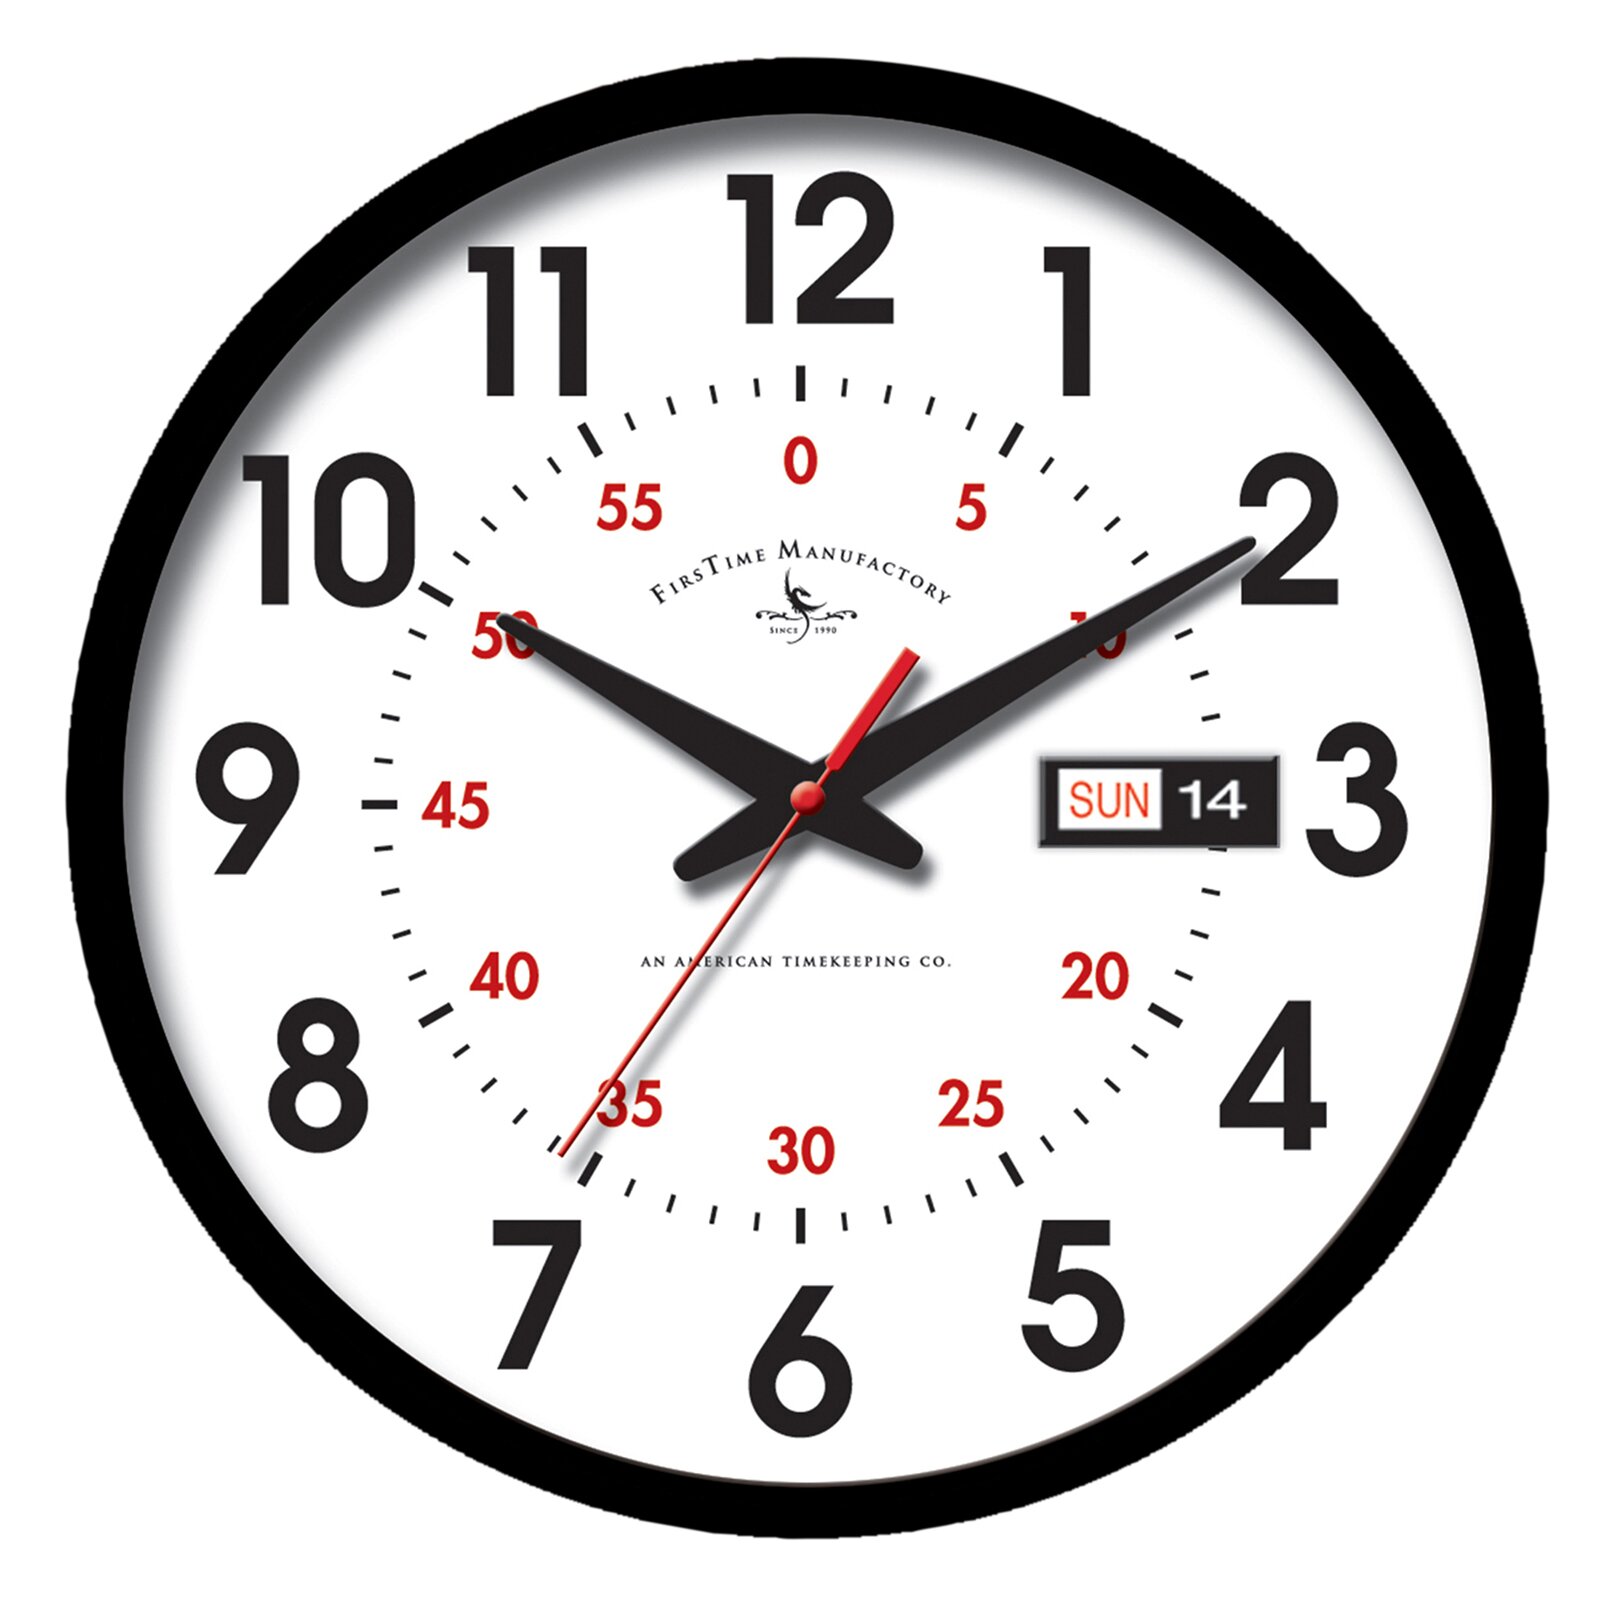 Время 14 39. 13:50 Часы. Часы и время. Стандартные часы. 13 Часов на часах.